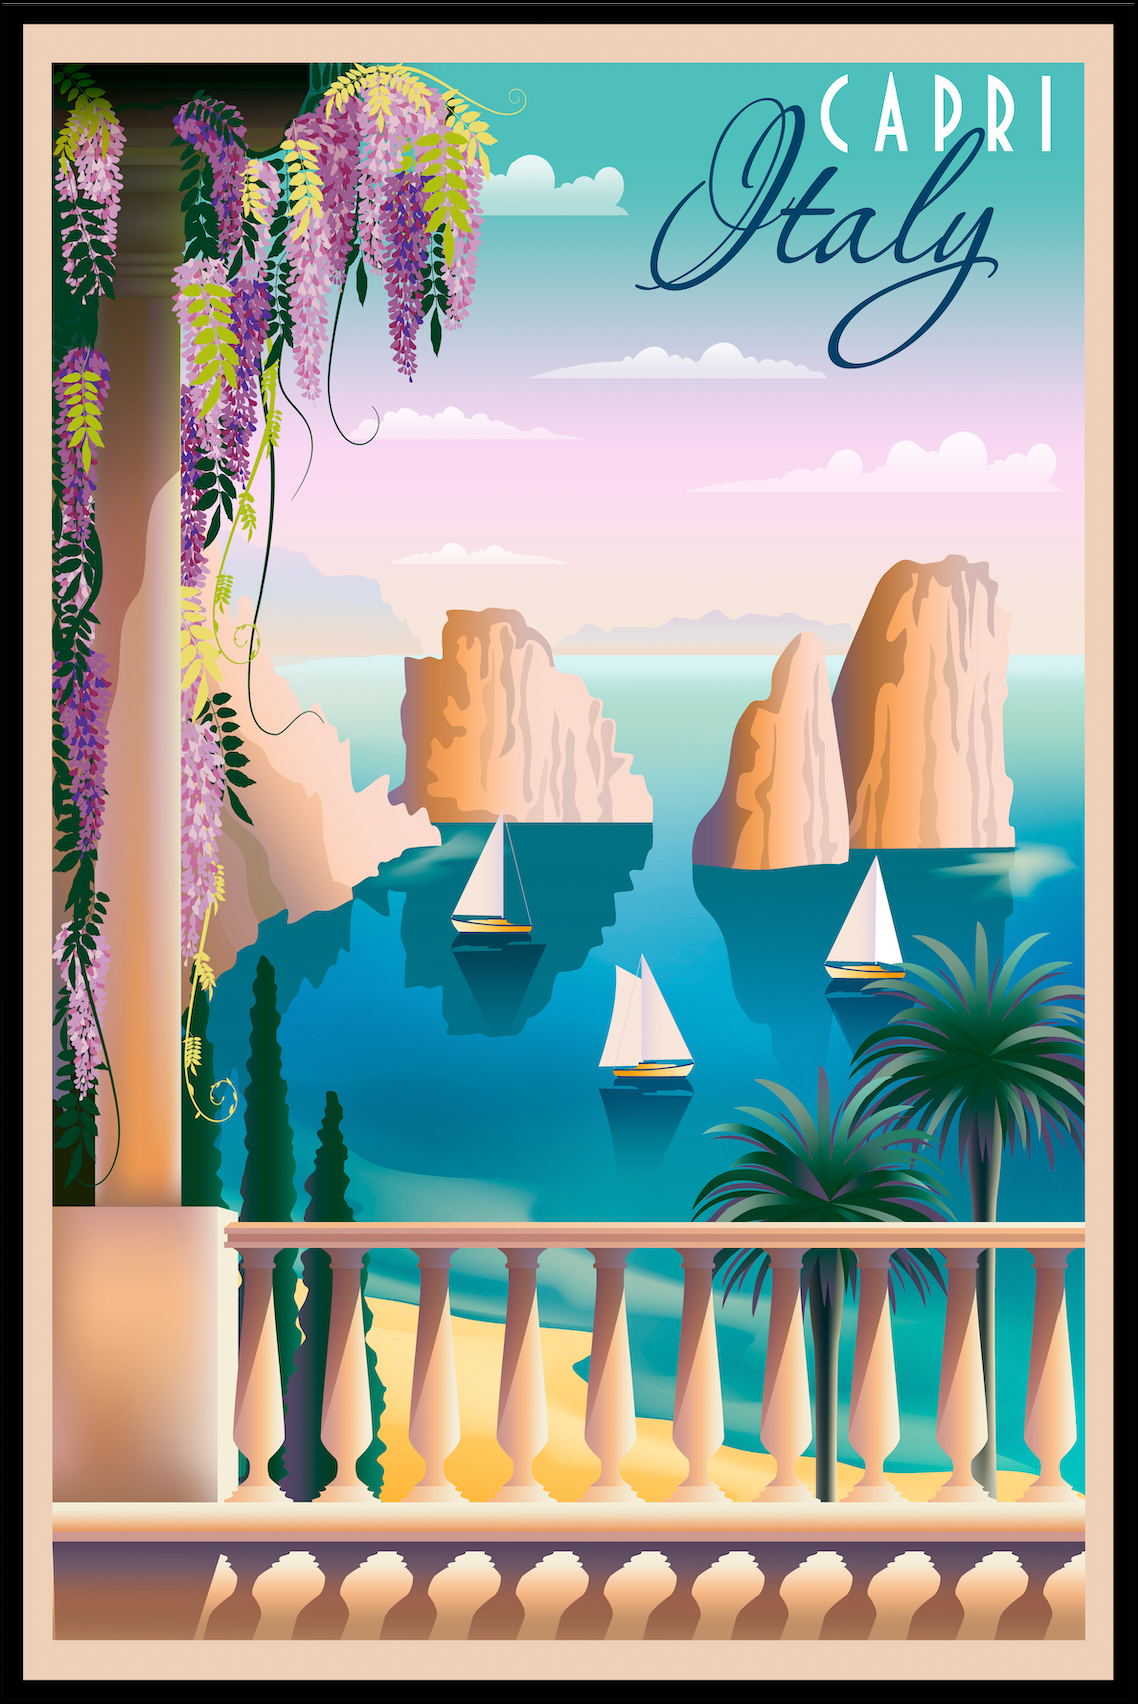 Capri affisch